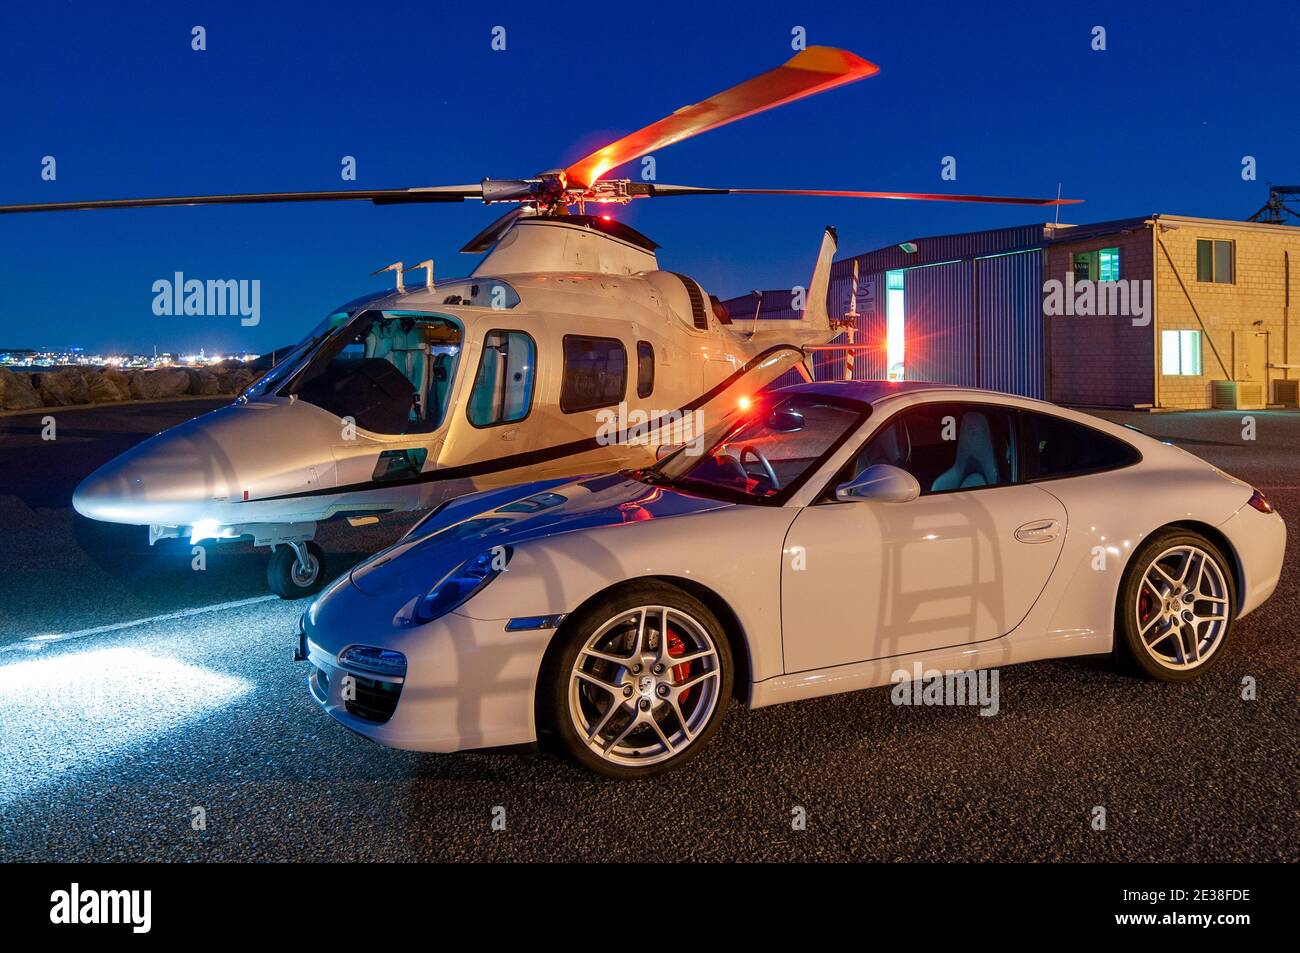 An Agusta 109 Power executive helicopter at twilight alongside a Porsche 911 car. Stock Photo